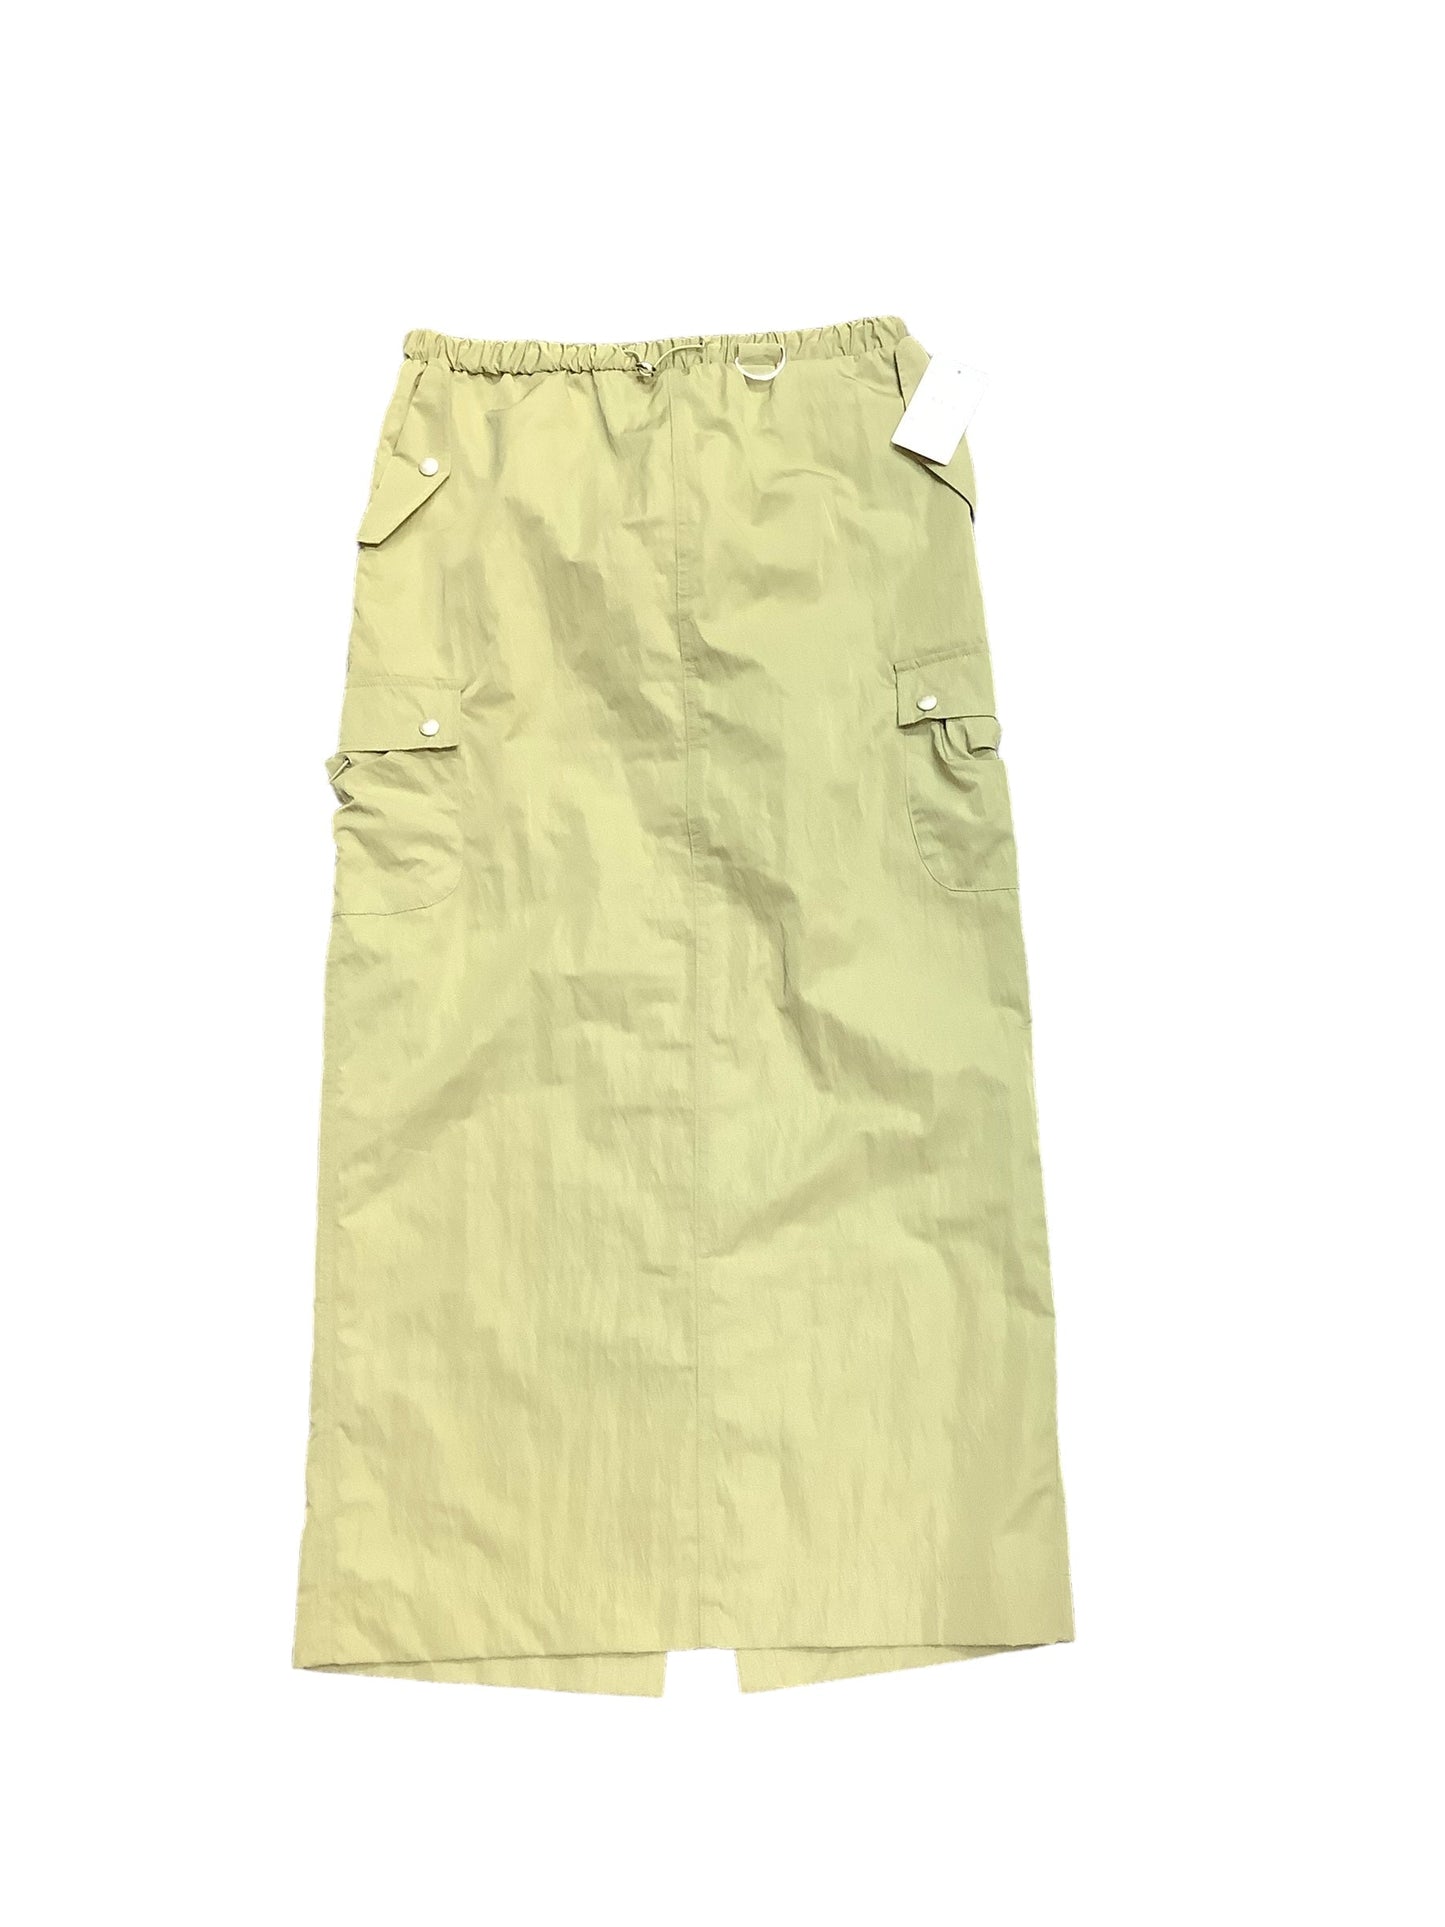 Green Skirt Maxi Blanknyc, Size 4